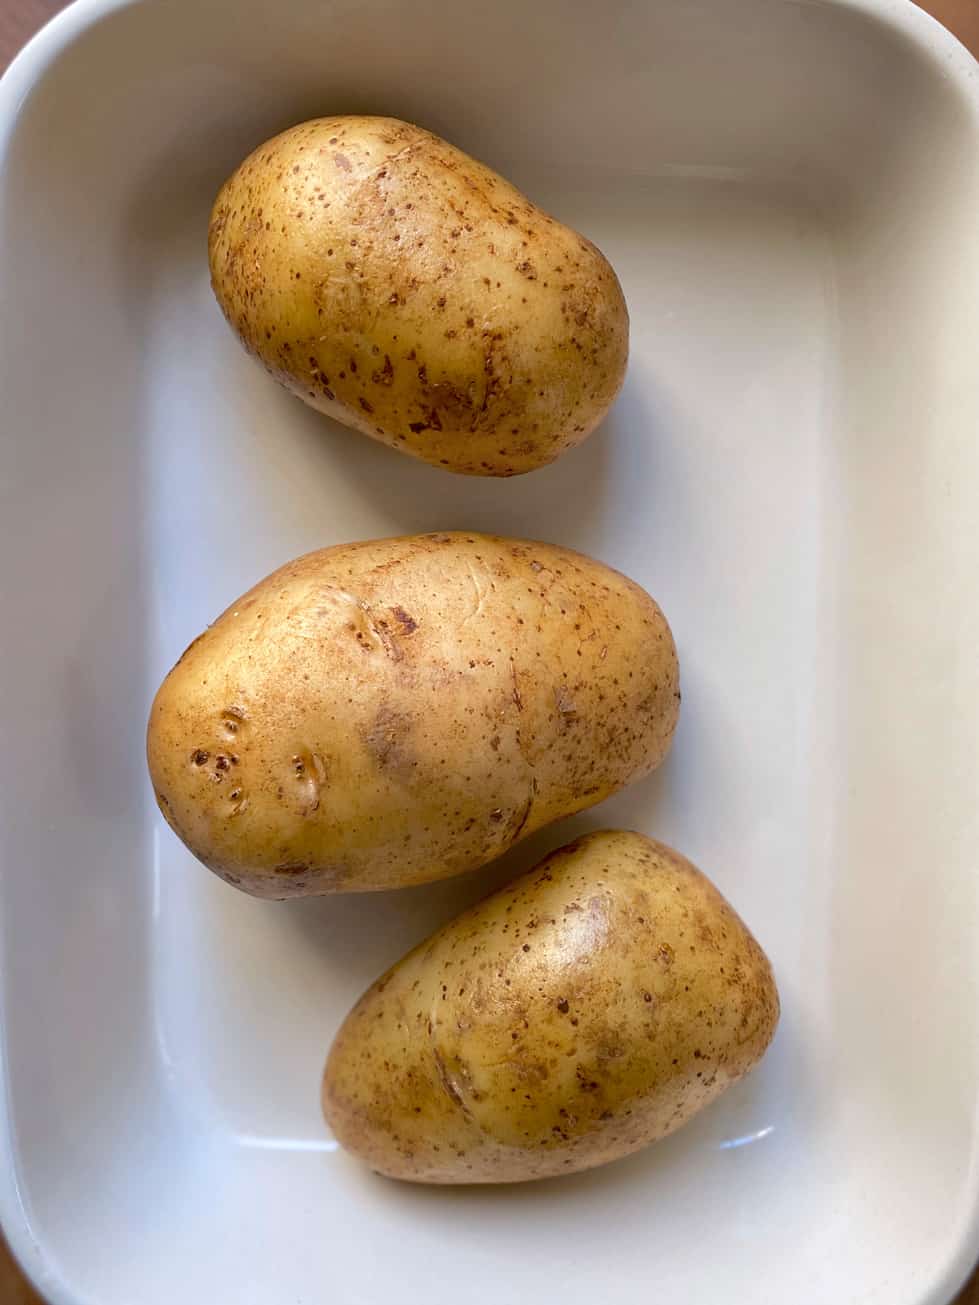 Three potatoes in a baking pan.